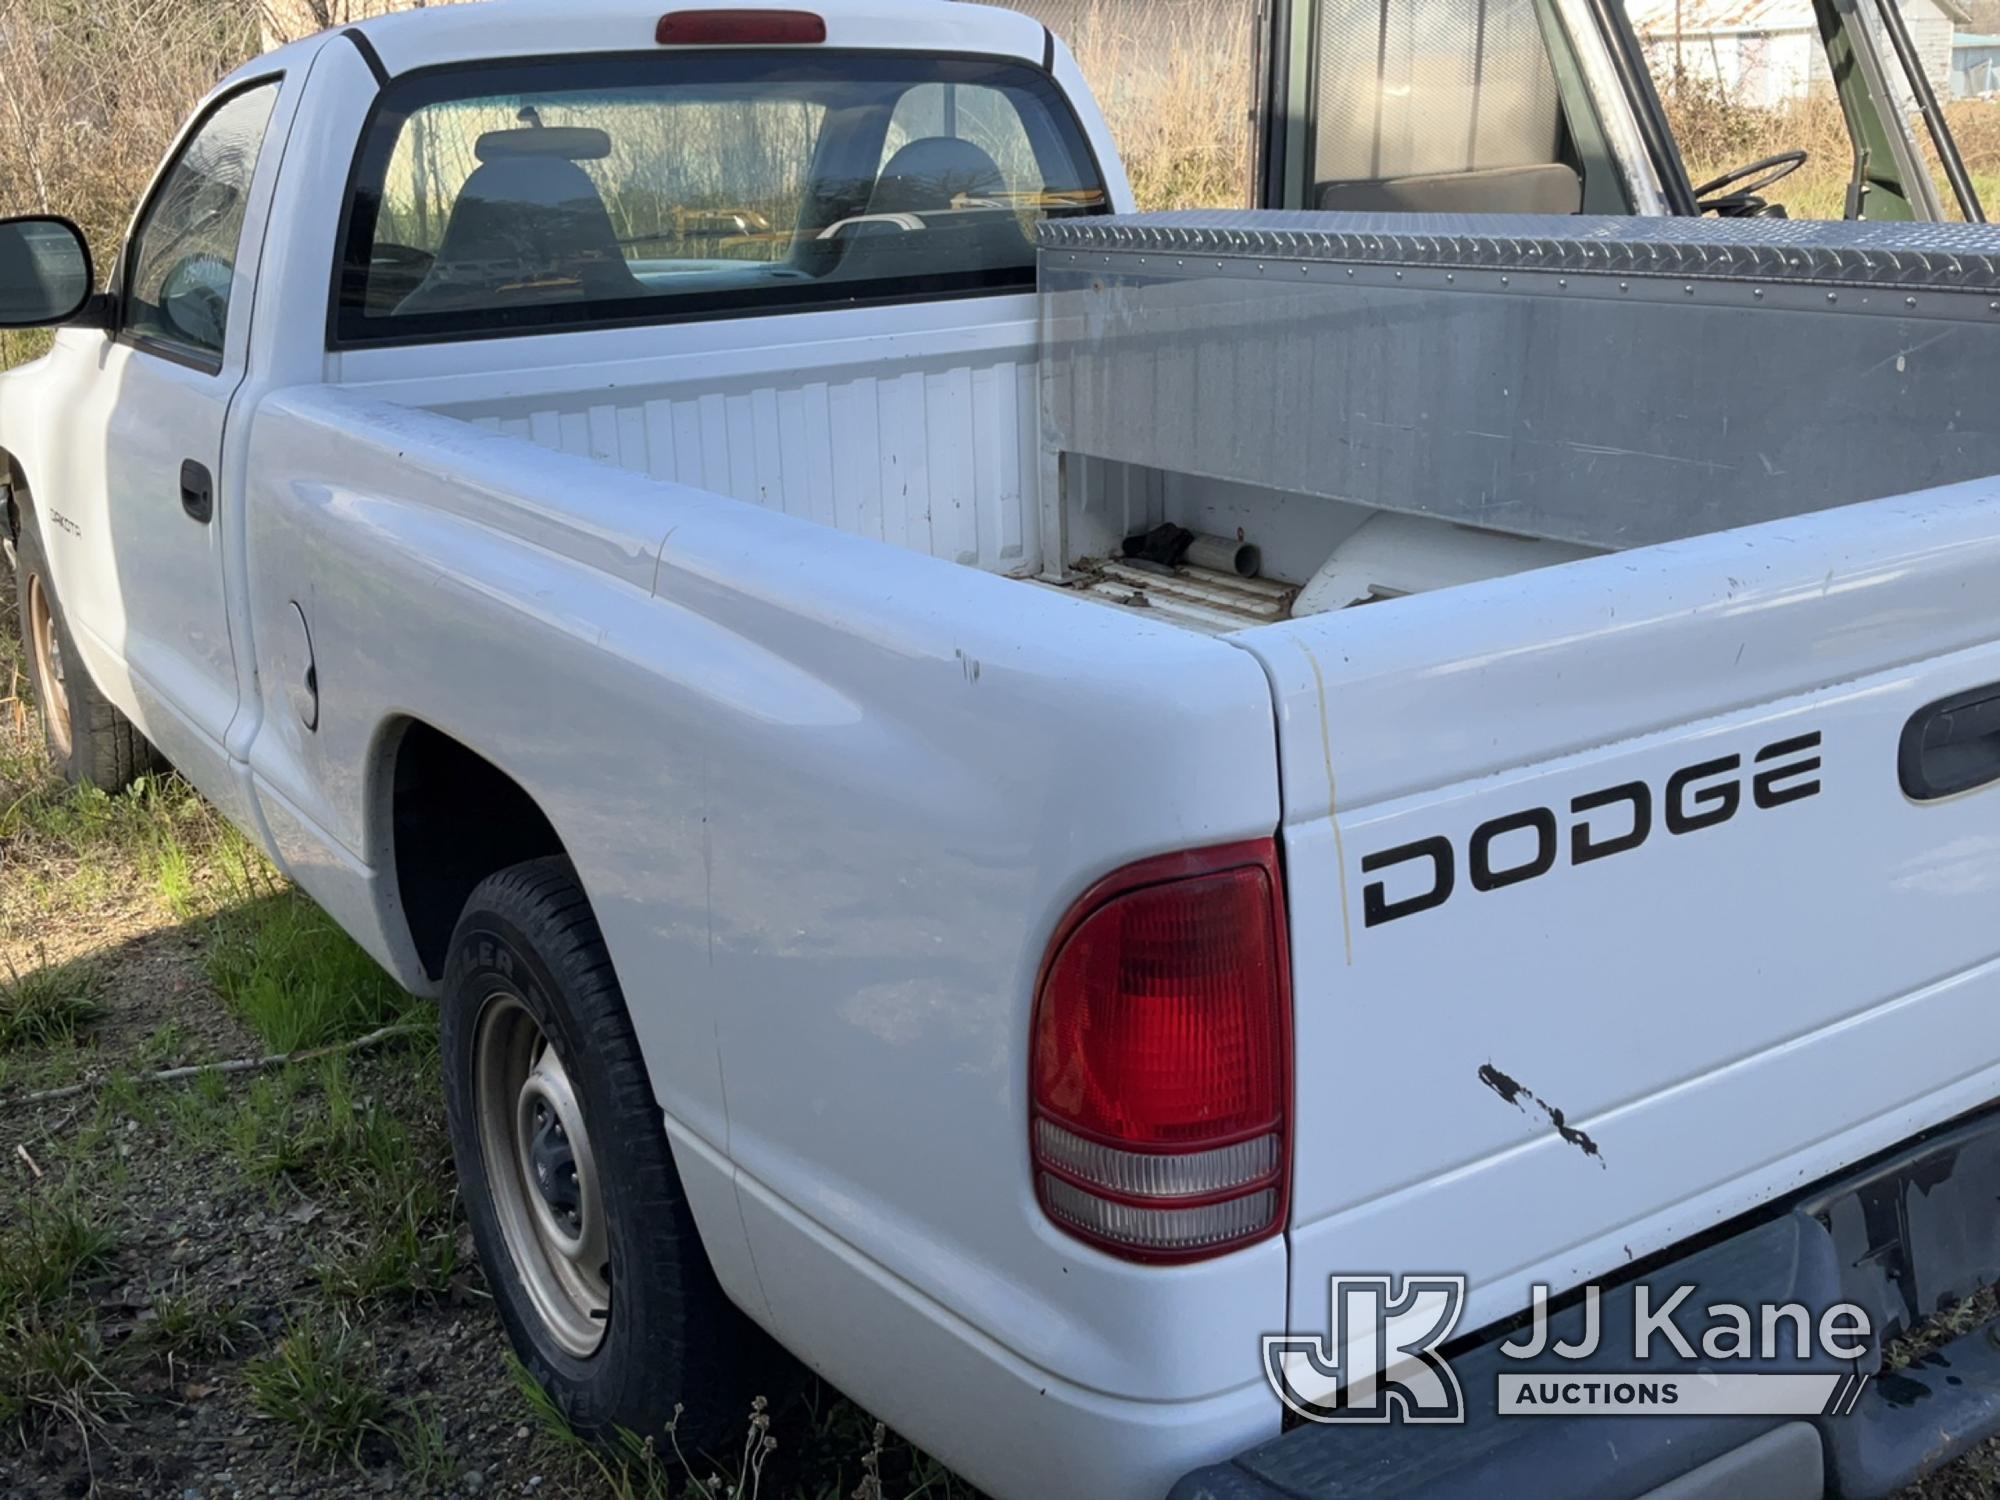 (Anderson, CA) 2000 Dodge Dakota Pickup Truck No Key) (Not Running,Condition Unknown.